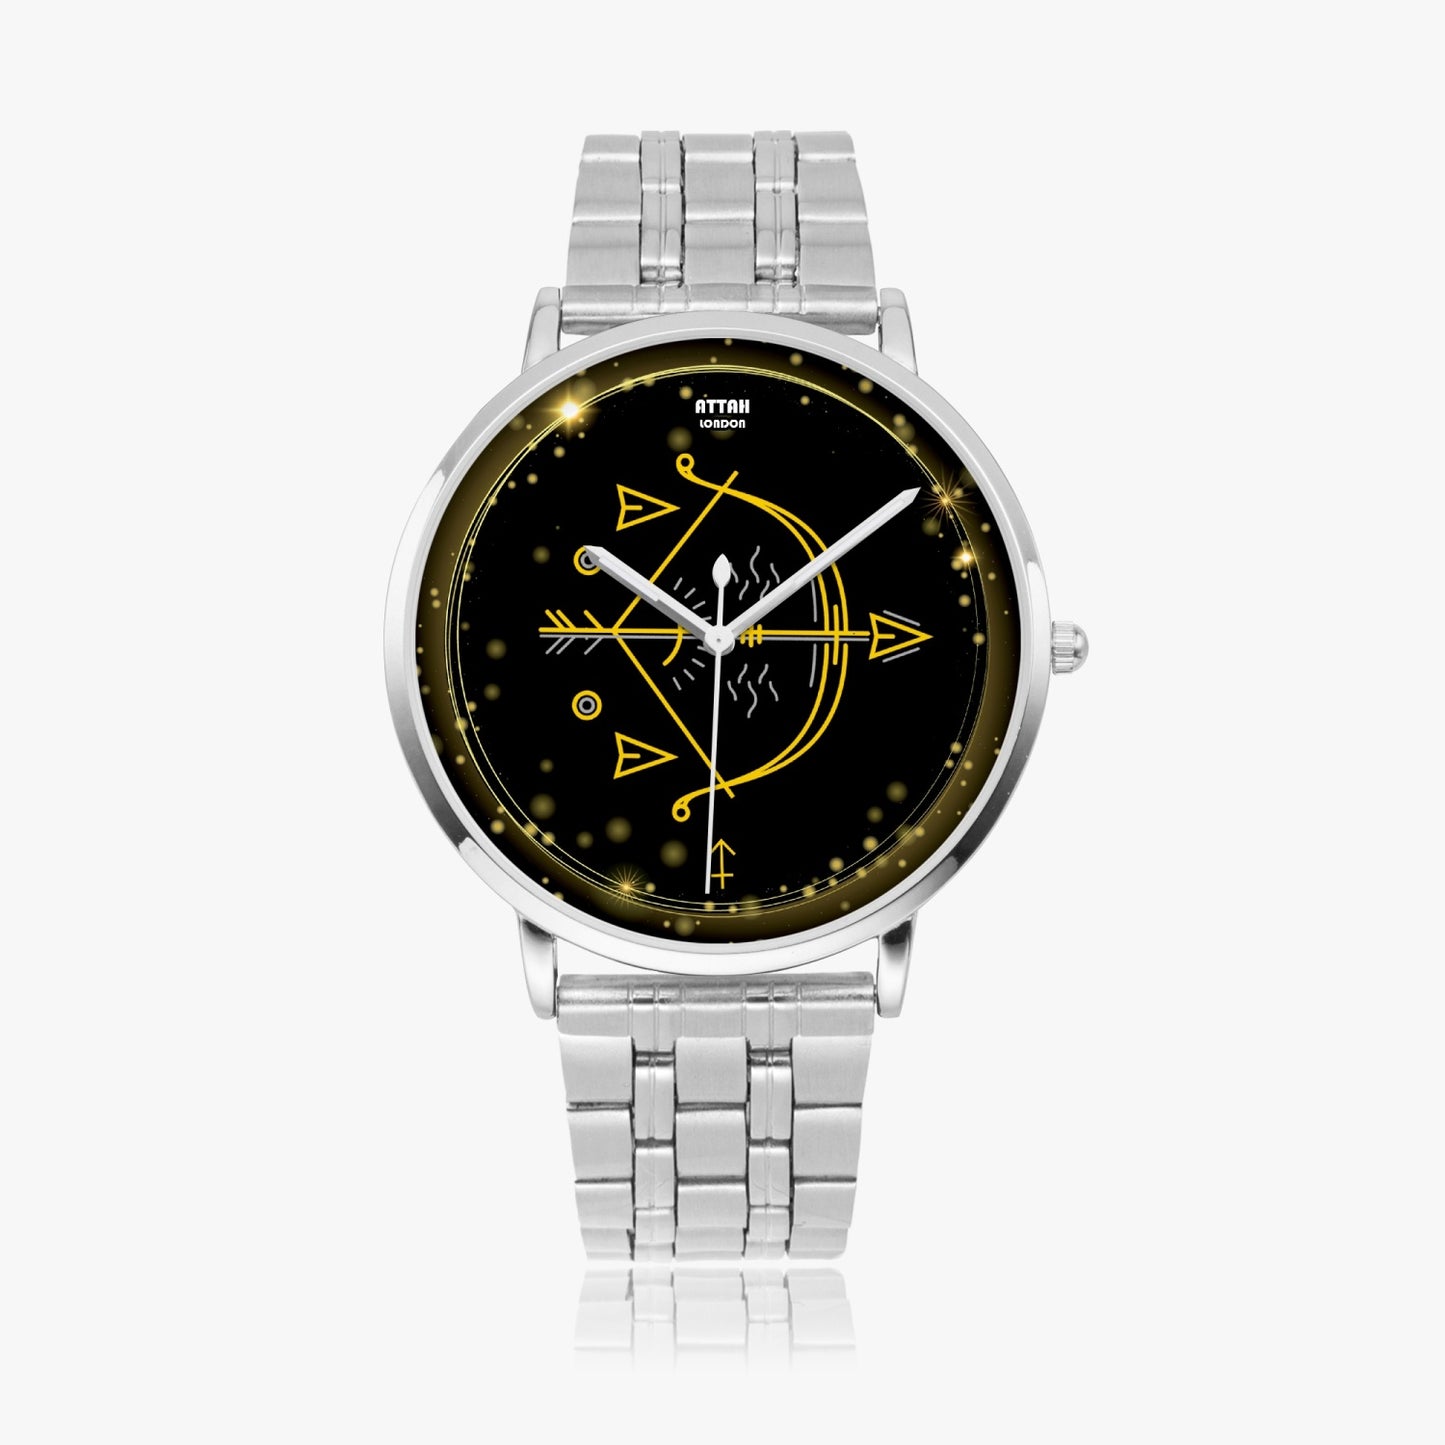 Sagittarius Watch